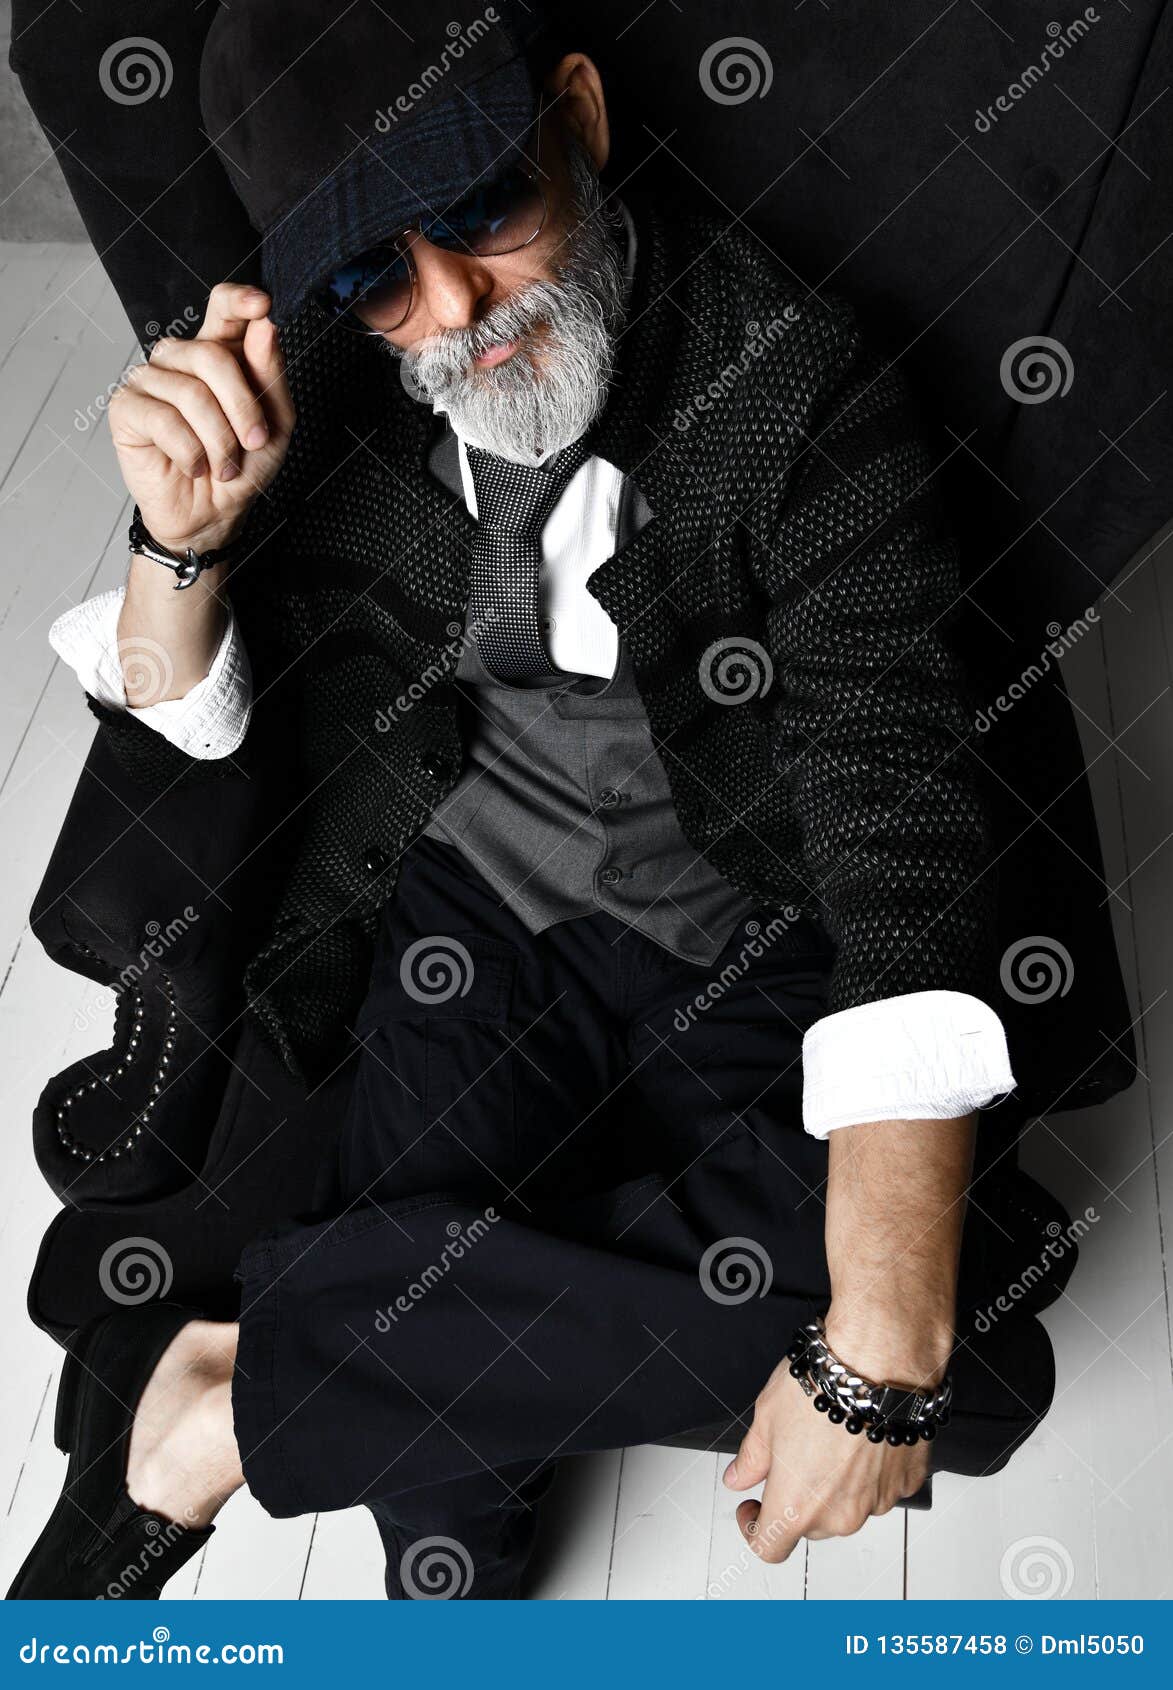 old brutal senior millionaire man in white shirt and aviator sunglasses stylish fashionable men